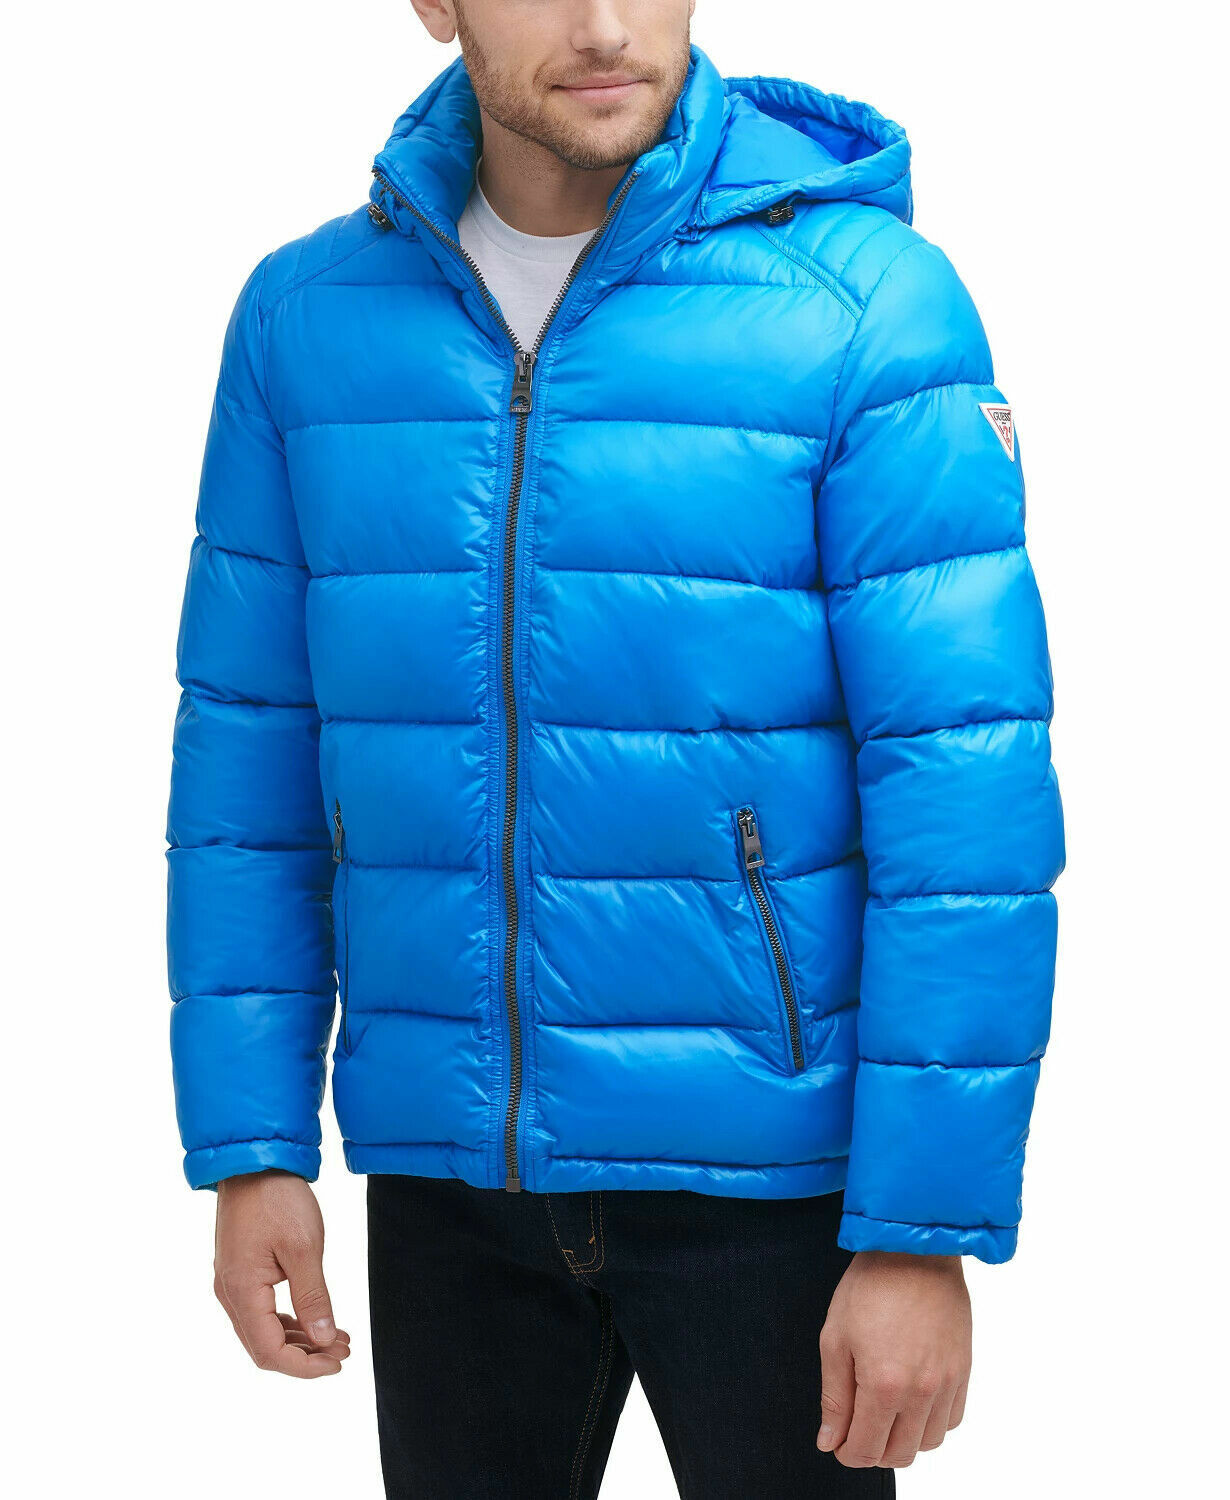 uitbarsting Interpunctie Dusver $225 GUESS Men's Blue Hooded Puffer Coat Winter Jacket Large pma1022a  888807504903 | eBay